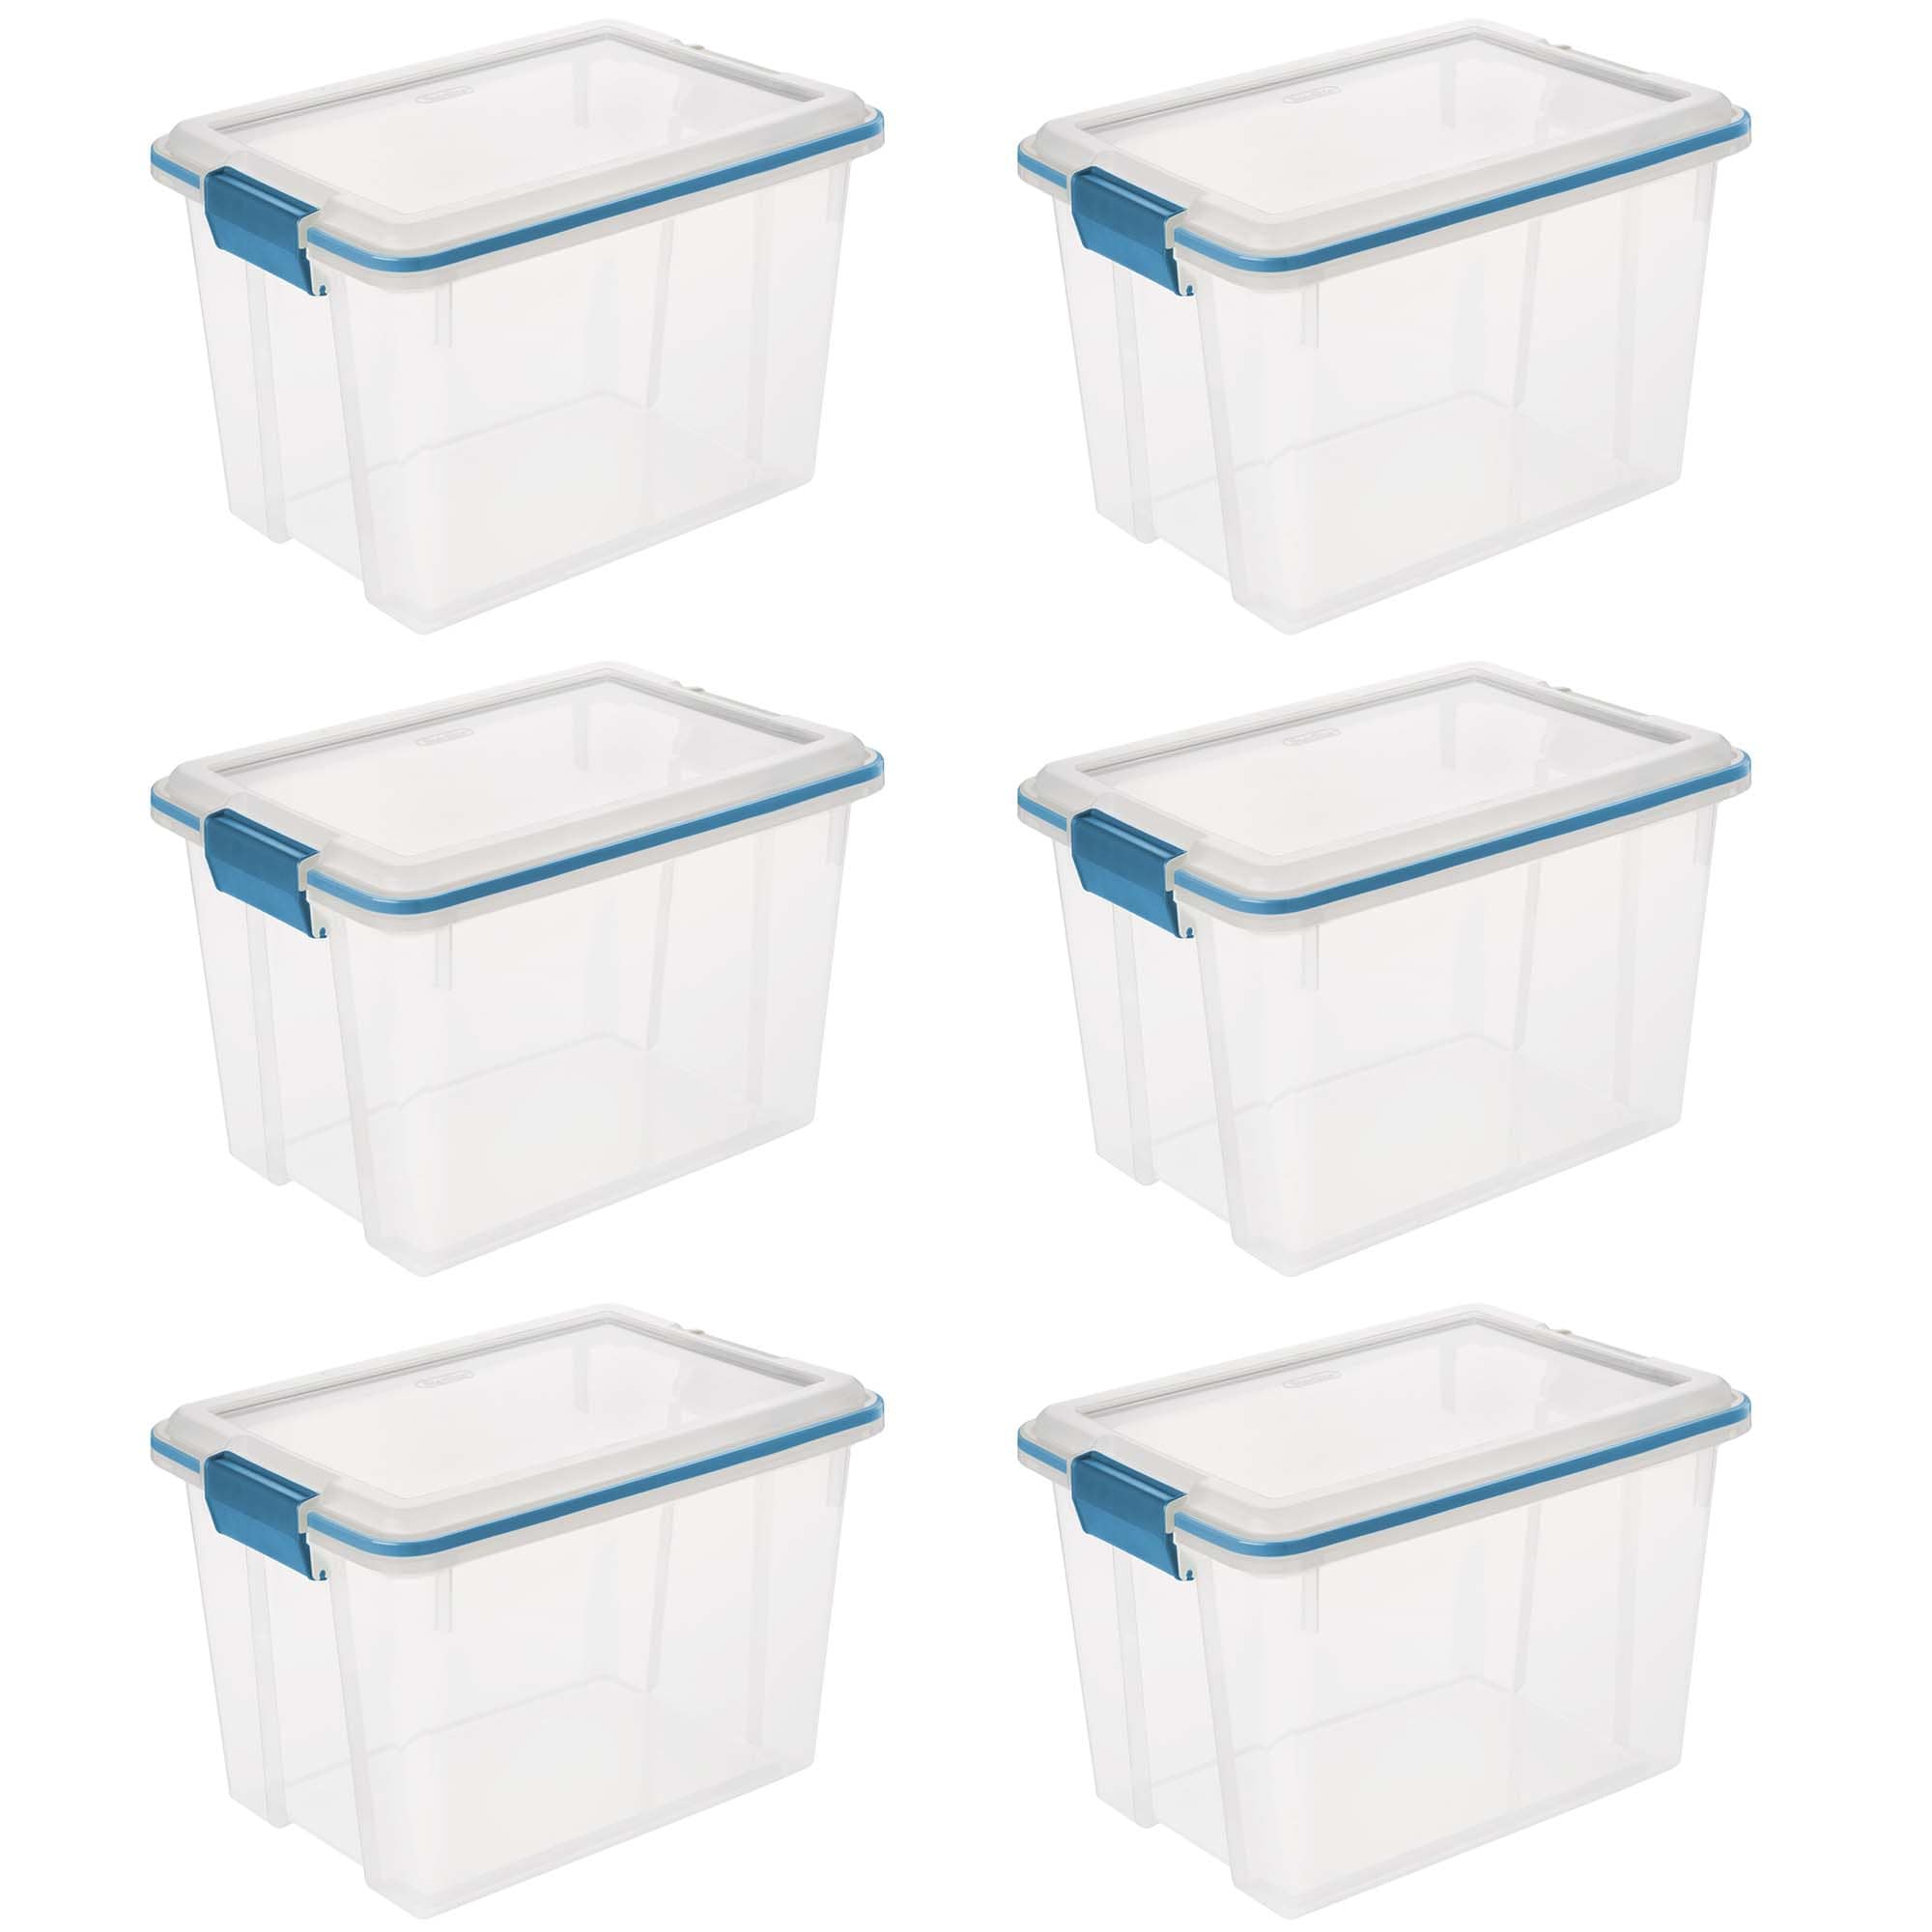 Buyitt 6-Pack Clear Plastic Storage Boxes, 20 Quart Plastic Storage Bins  with Lids